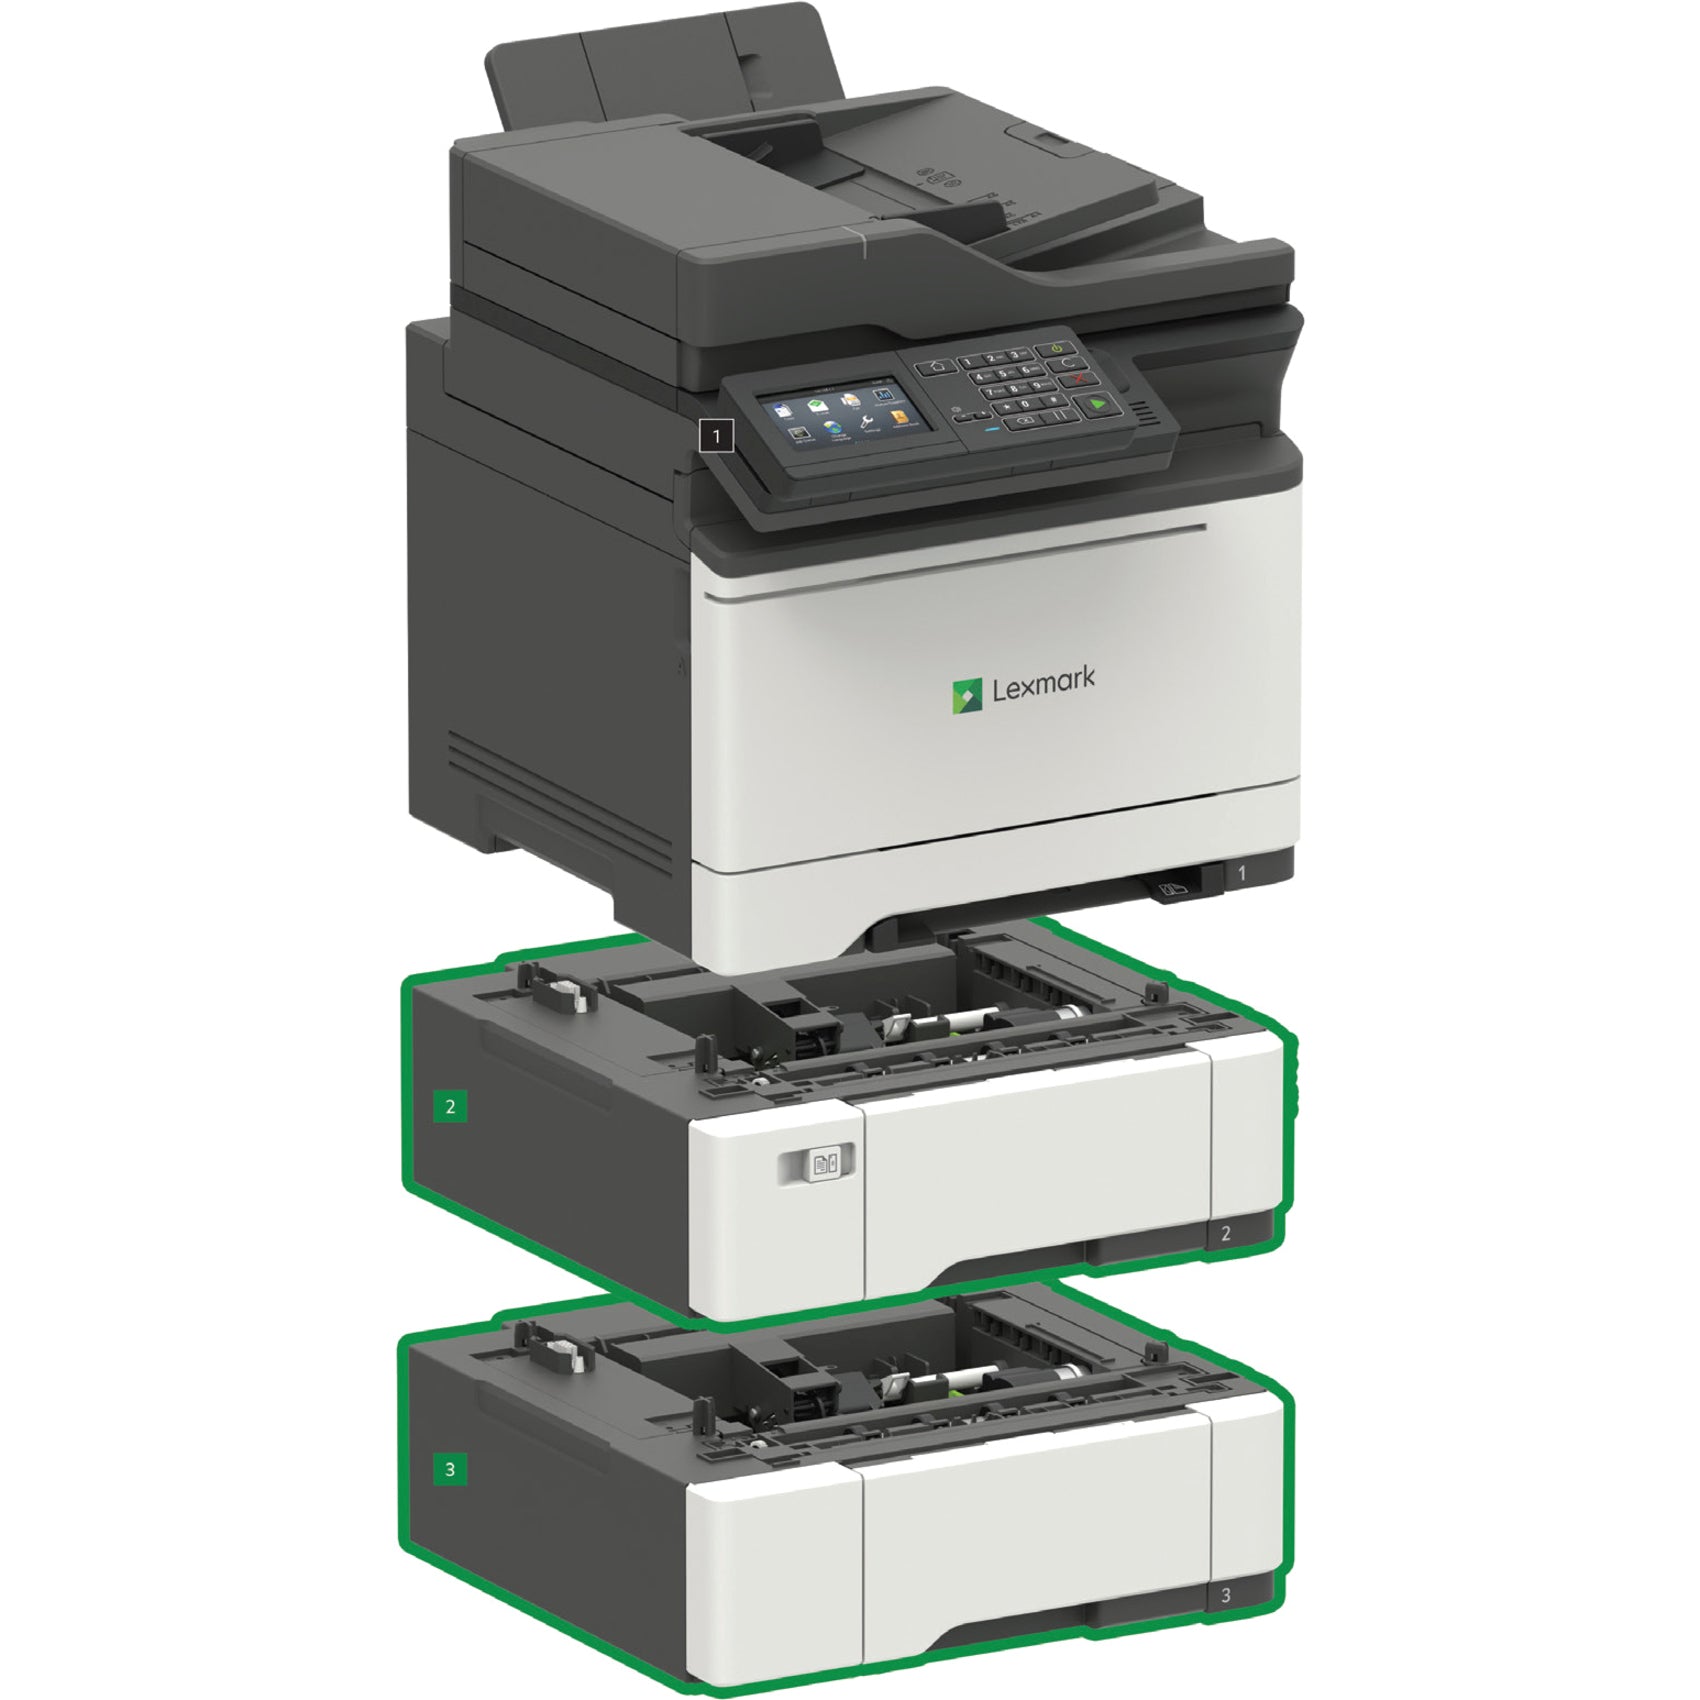 Lexmark 42CT360 CX522ade Color Laser Multifunction Printer, Automatic Duplex Printing, 35 ppm, 2400 x 600 dpi